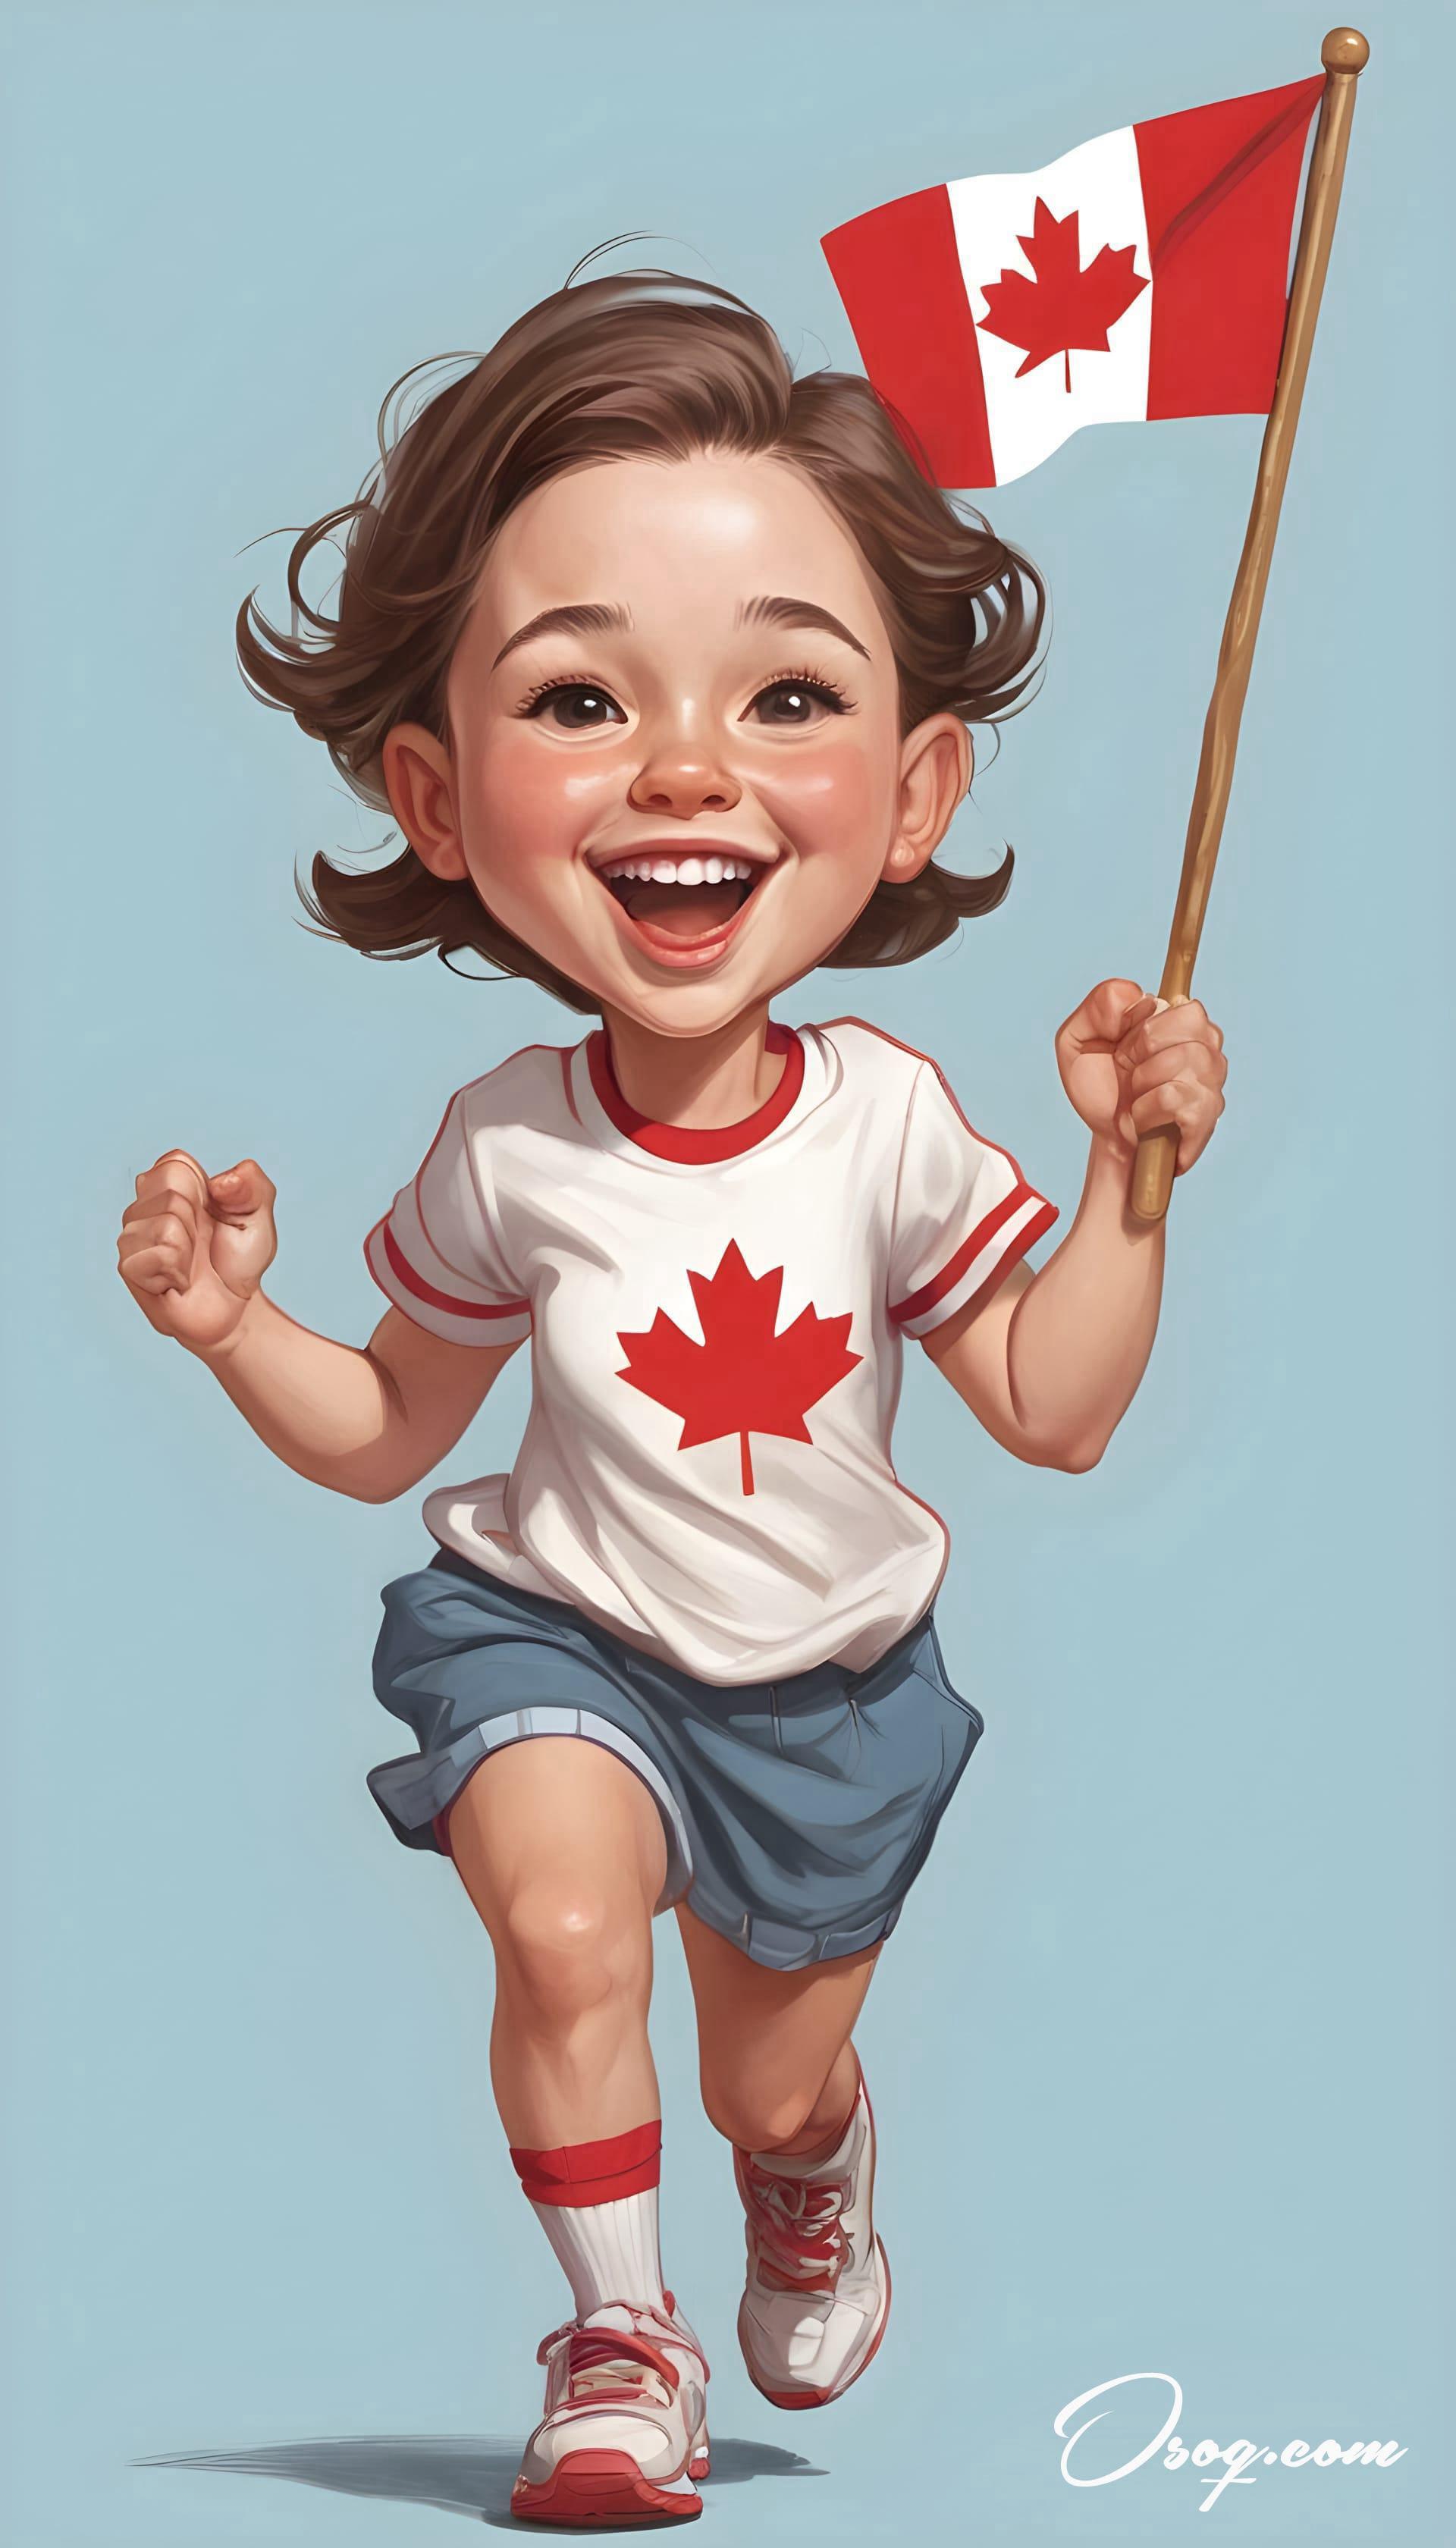 Canada cartoon 19